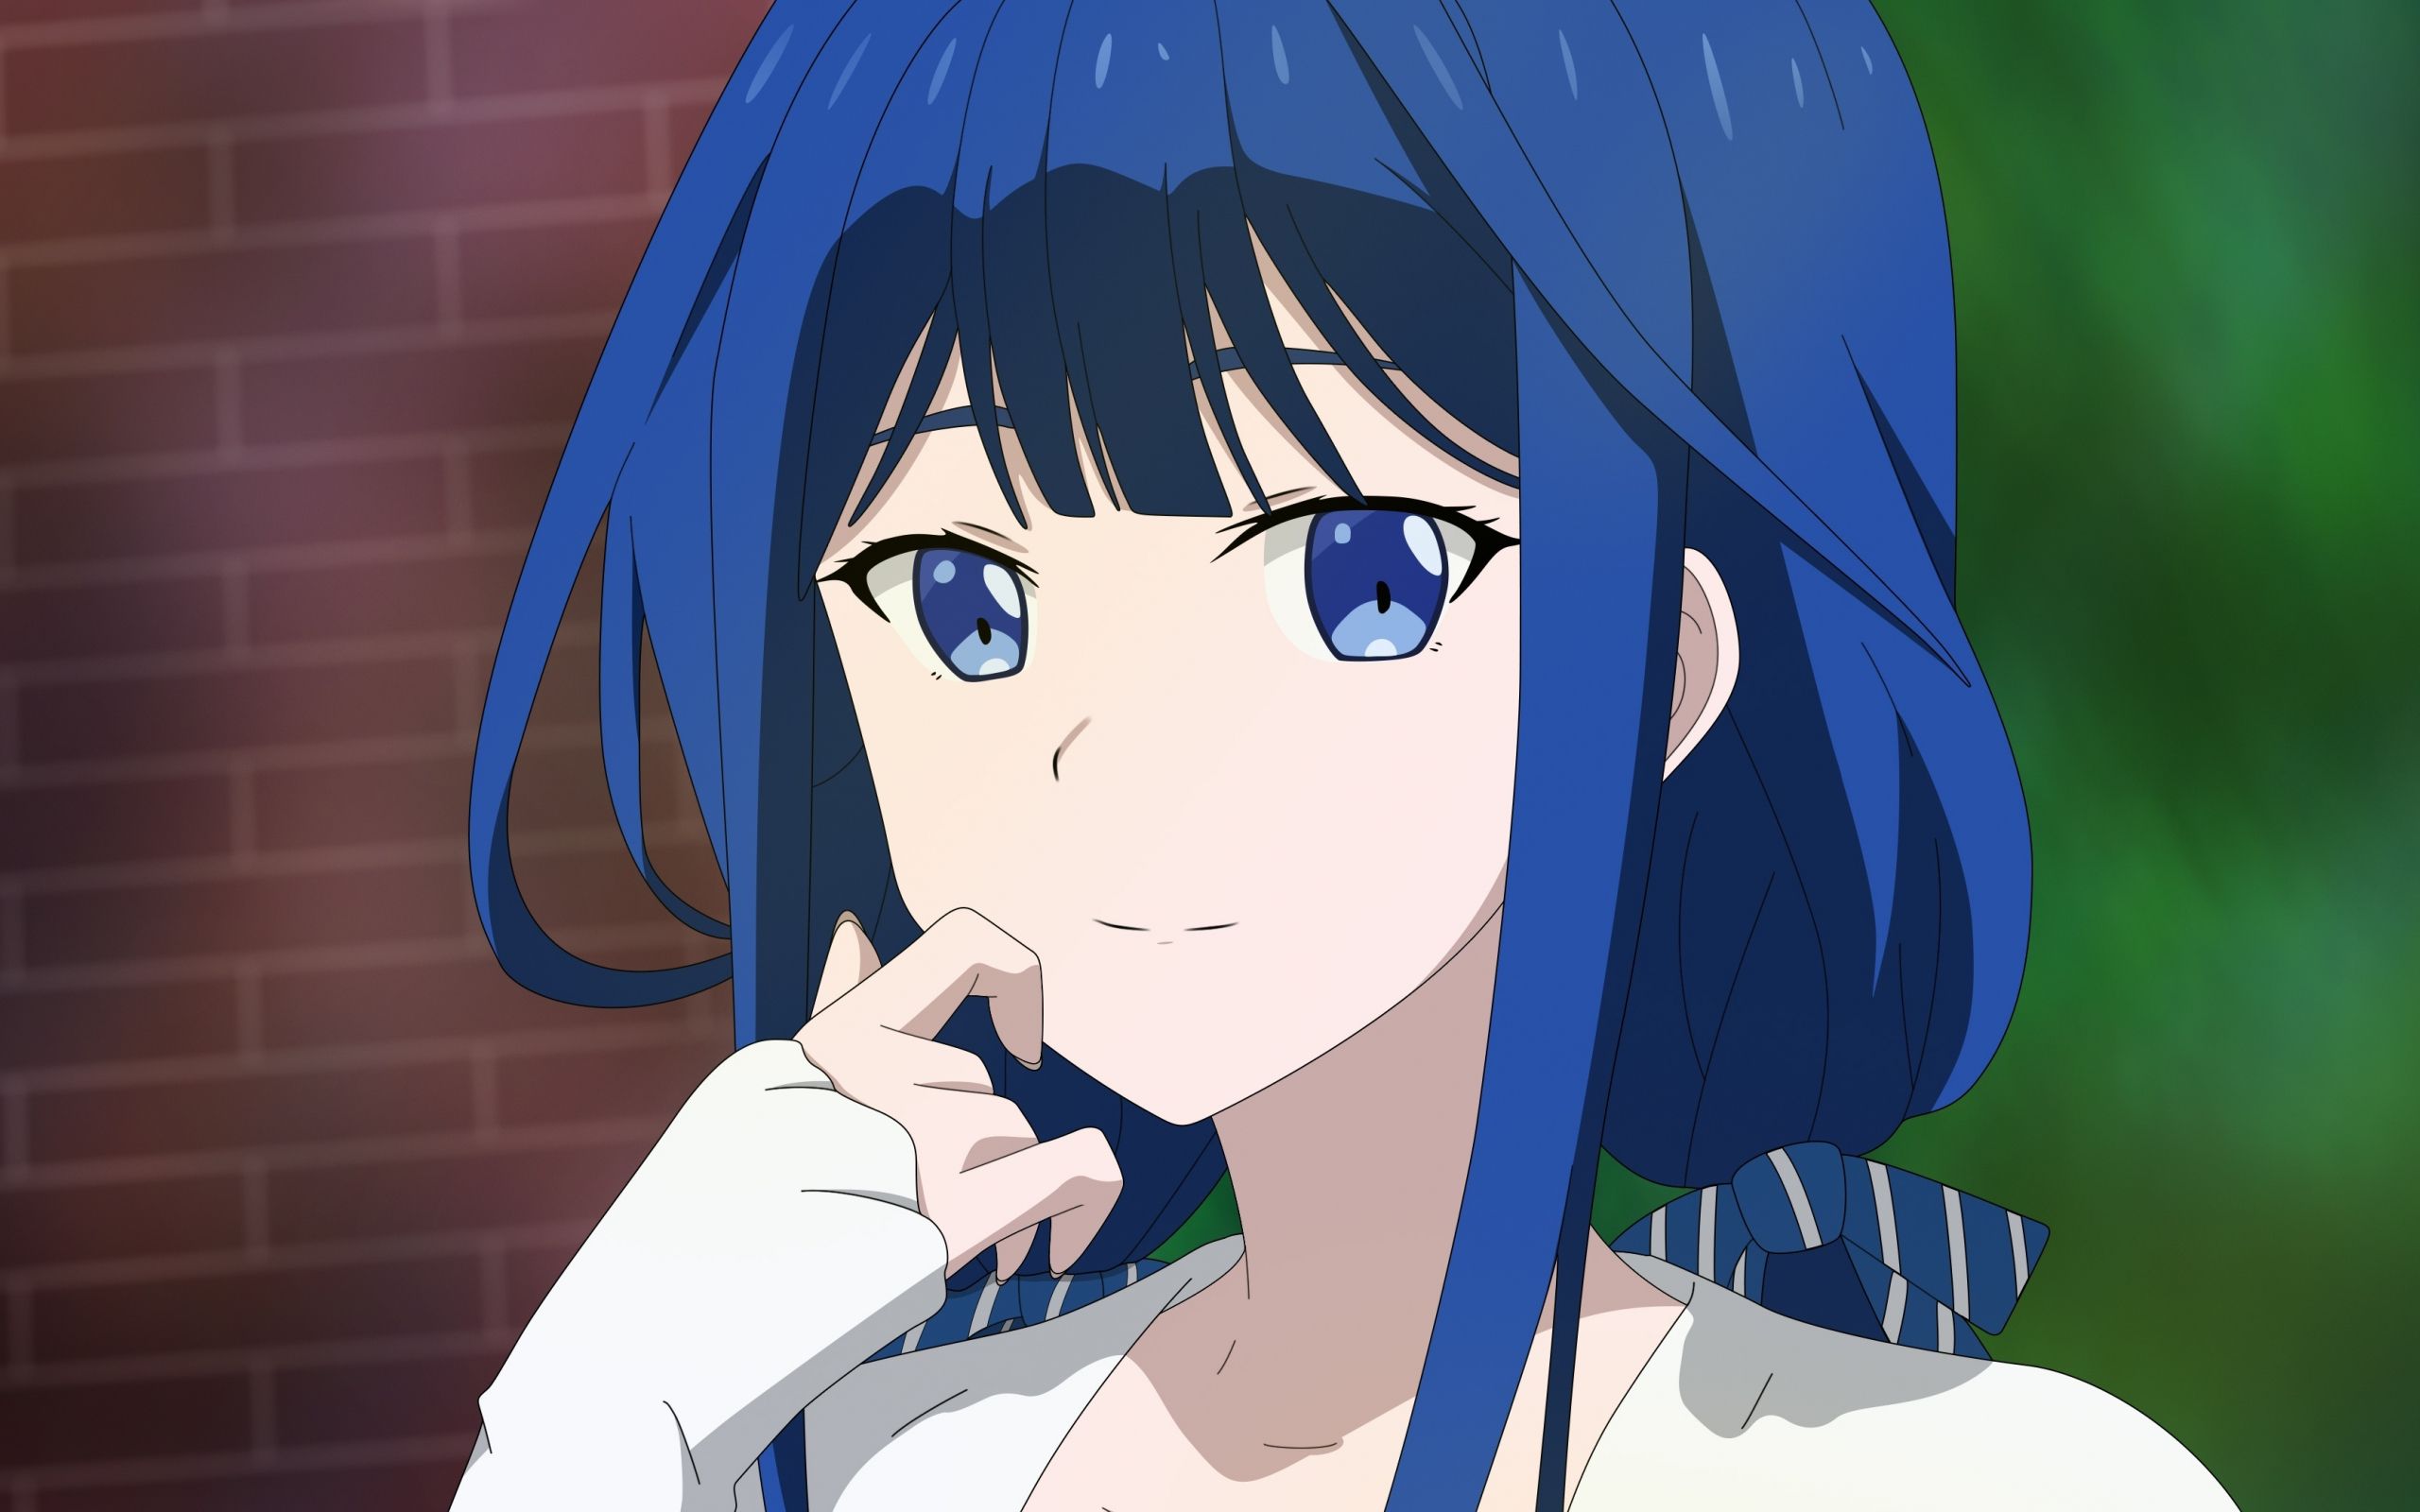 Download 2560x1600 wallpaper aki adagaki, cute, anime girl, blue hair, dual wide, widescreen 16: widescreen, 2560x1600 HD image, background, 5904